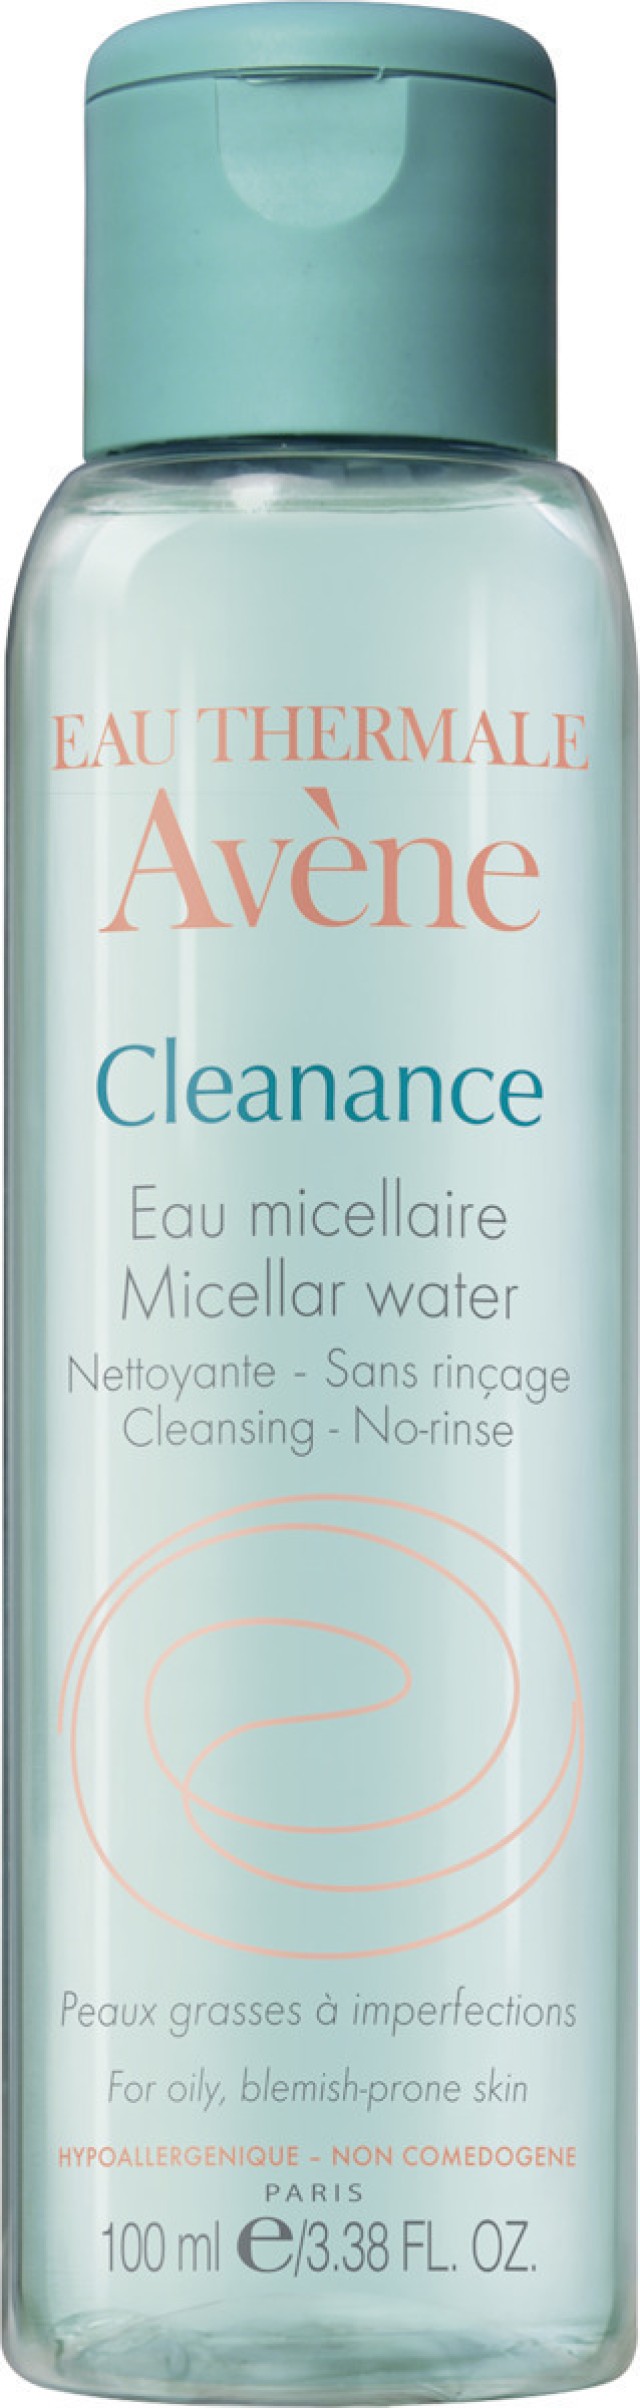 Eau Thermale Cleanance Eau Micellaire Nett, Νερό Micellaire Καθαρισμό Προσώπου & Ματιών 100ml